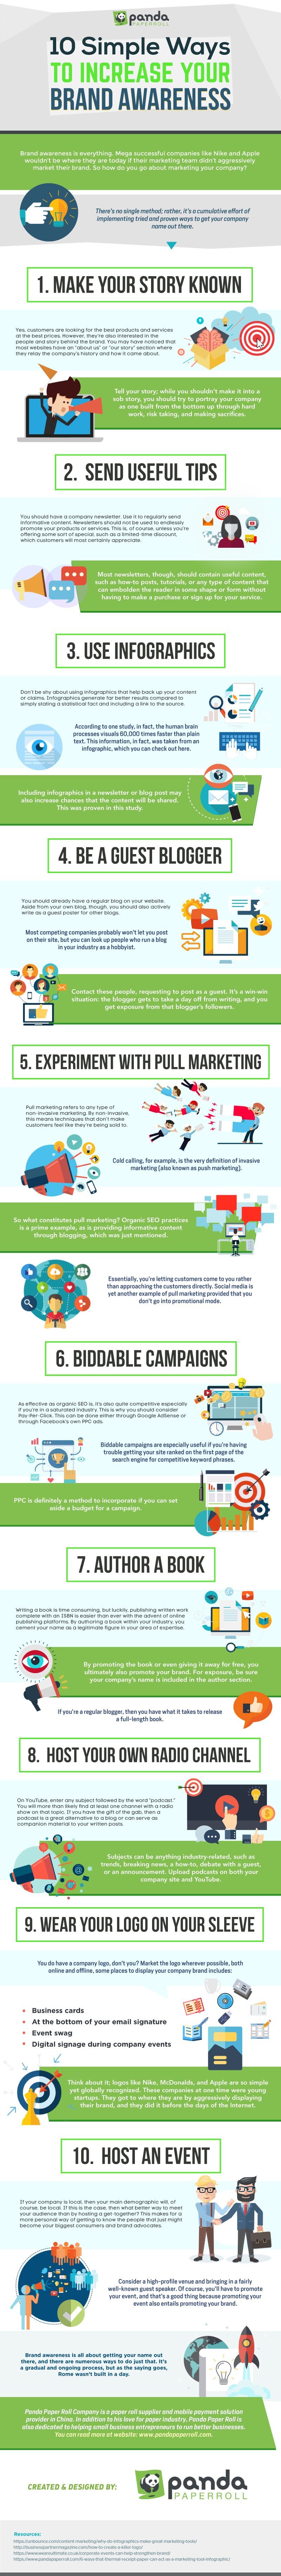 10 simple ways to increase brand awareness info 1 10 Ways to Increase Brand Awerness [Infographic]